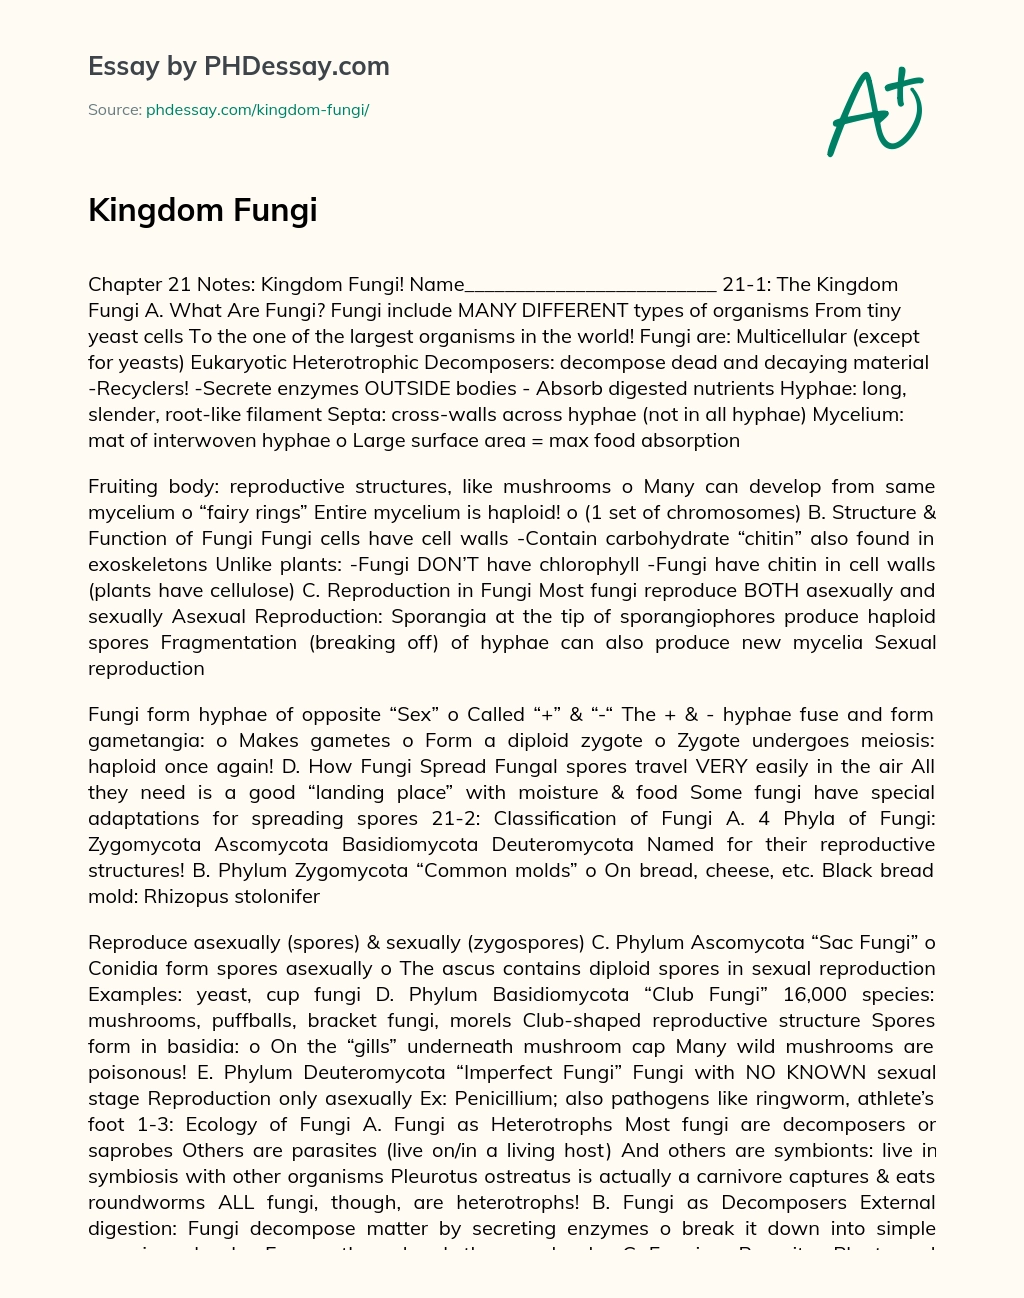 Kingdom Fungi essay